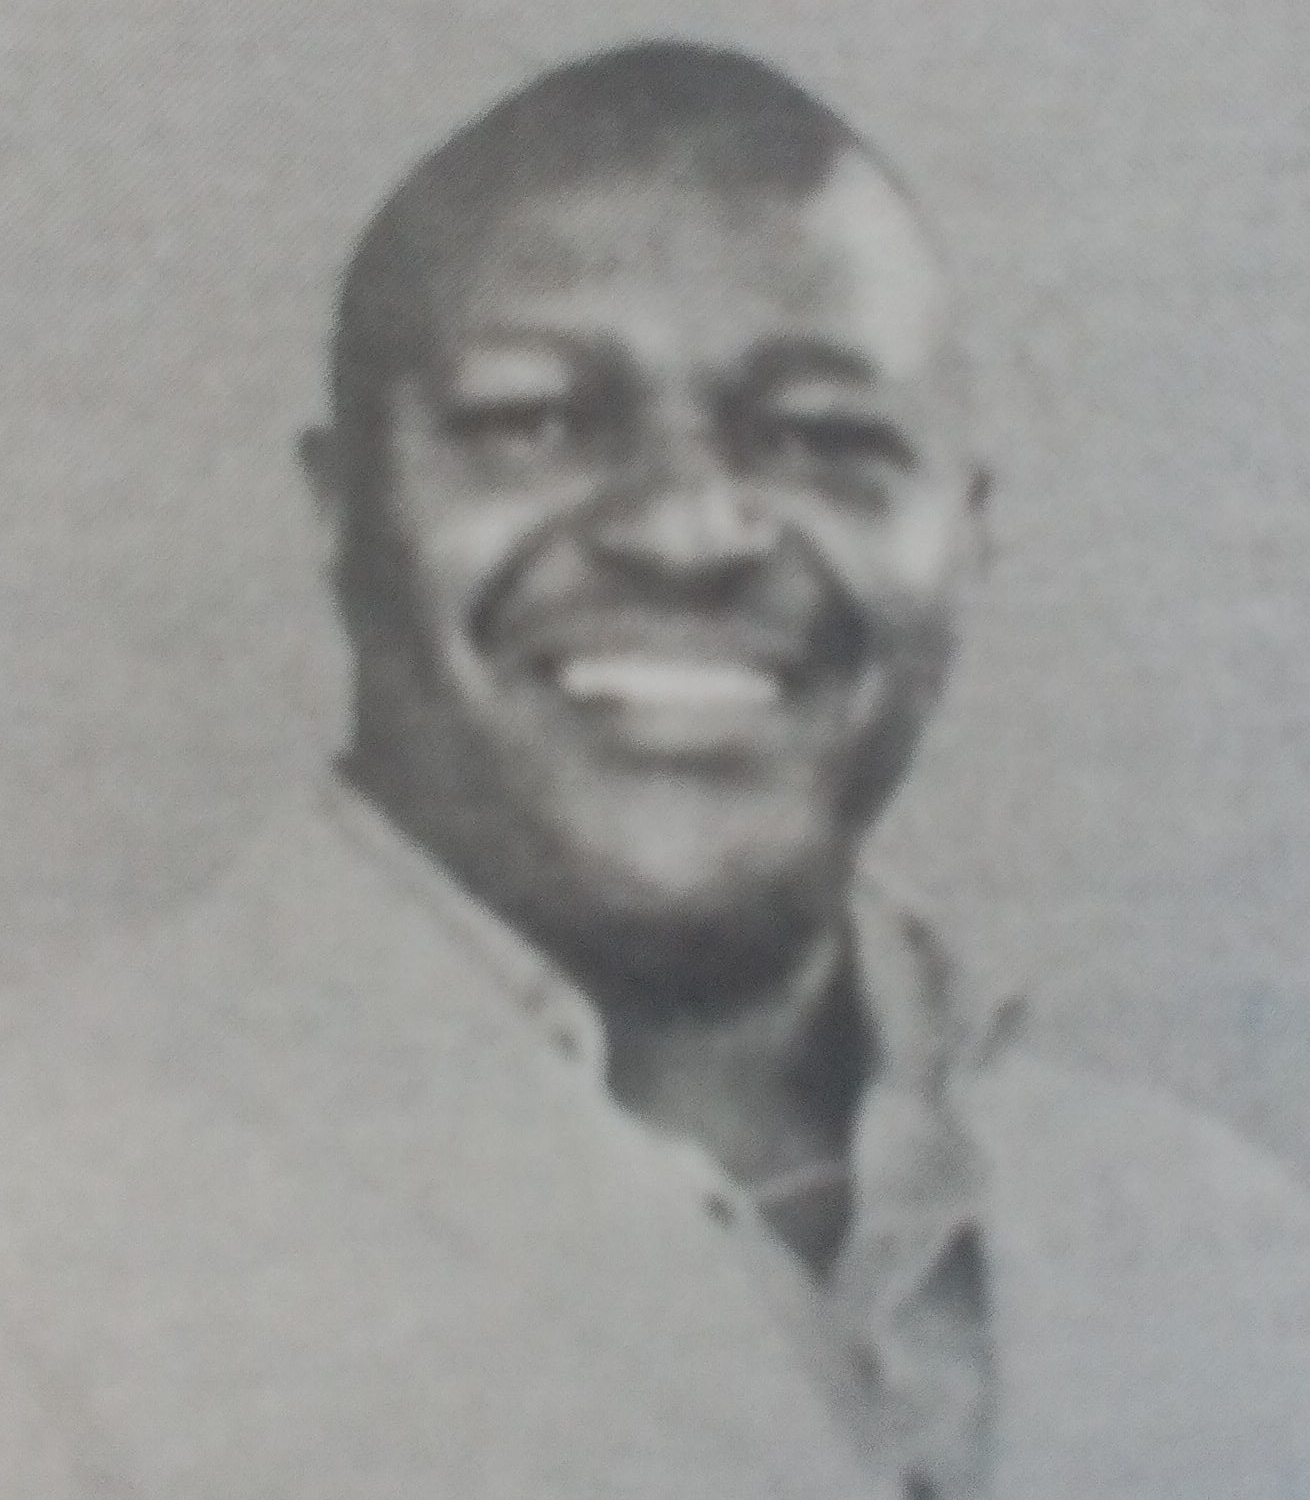 Obituary Image of Dan Jared Nyambuga Omolo